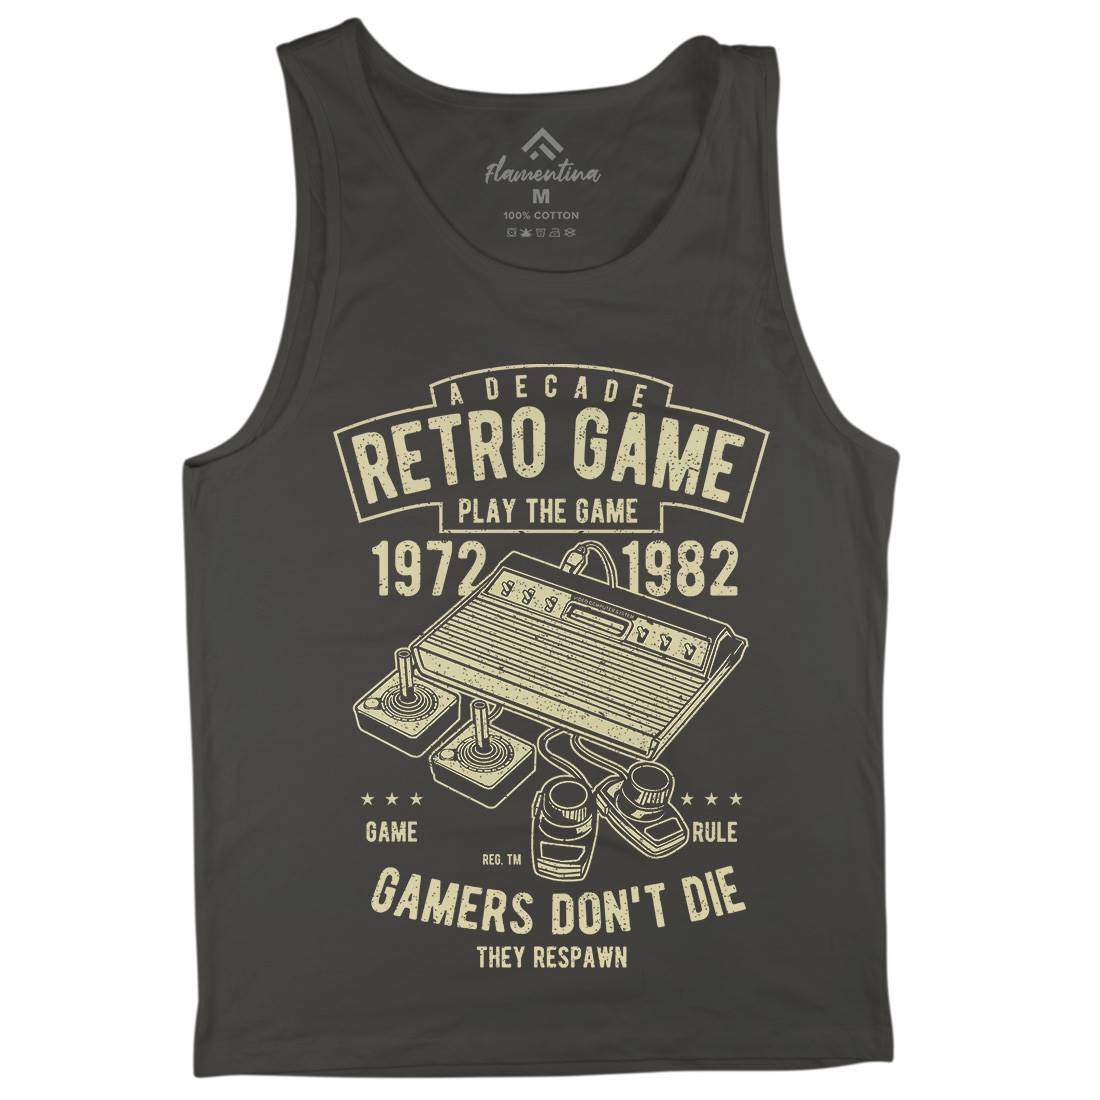 Retro Game Club Mens Tank Top Vest Geek A741